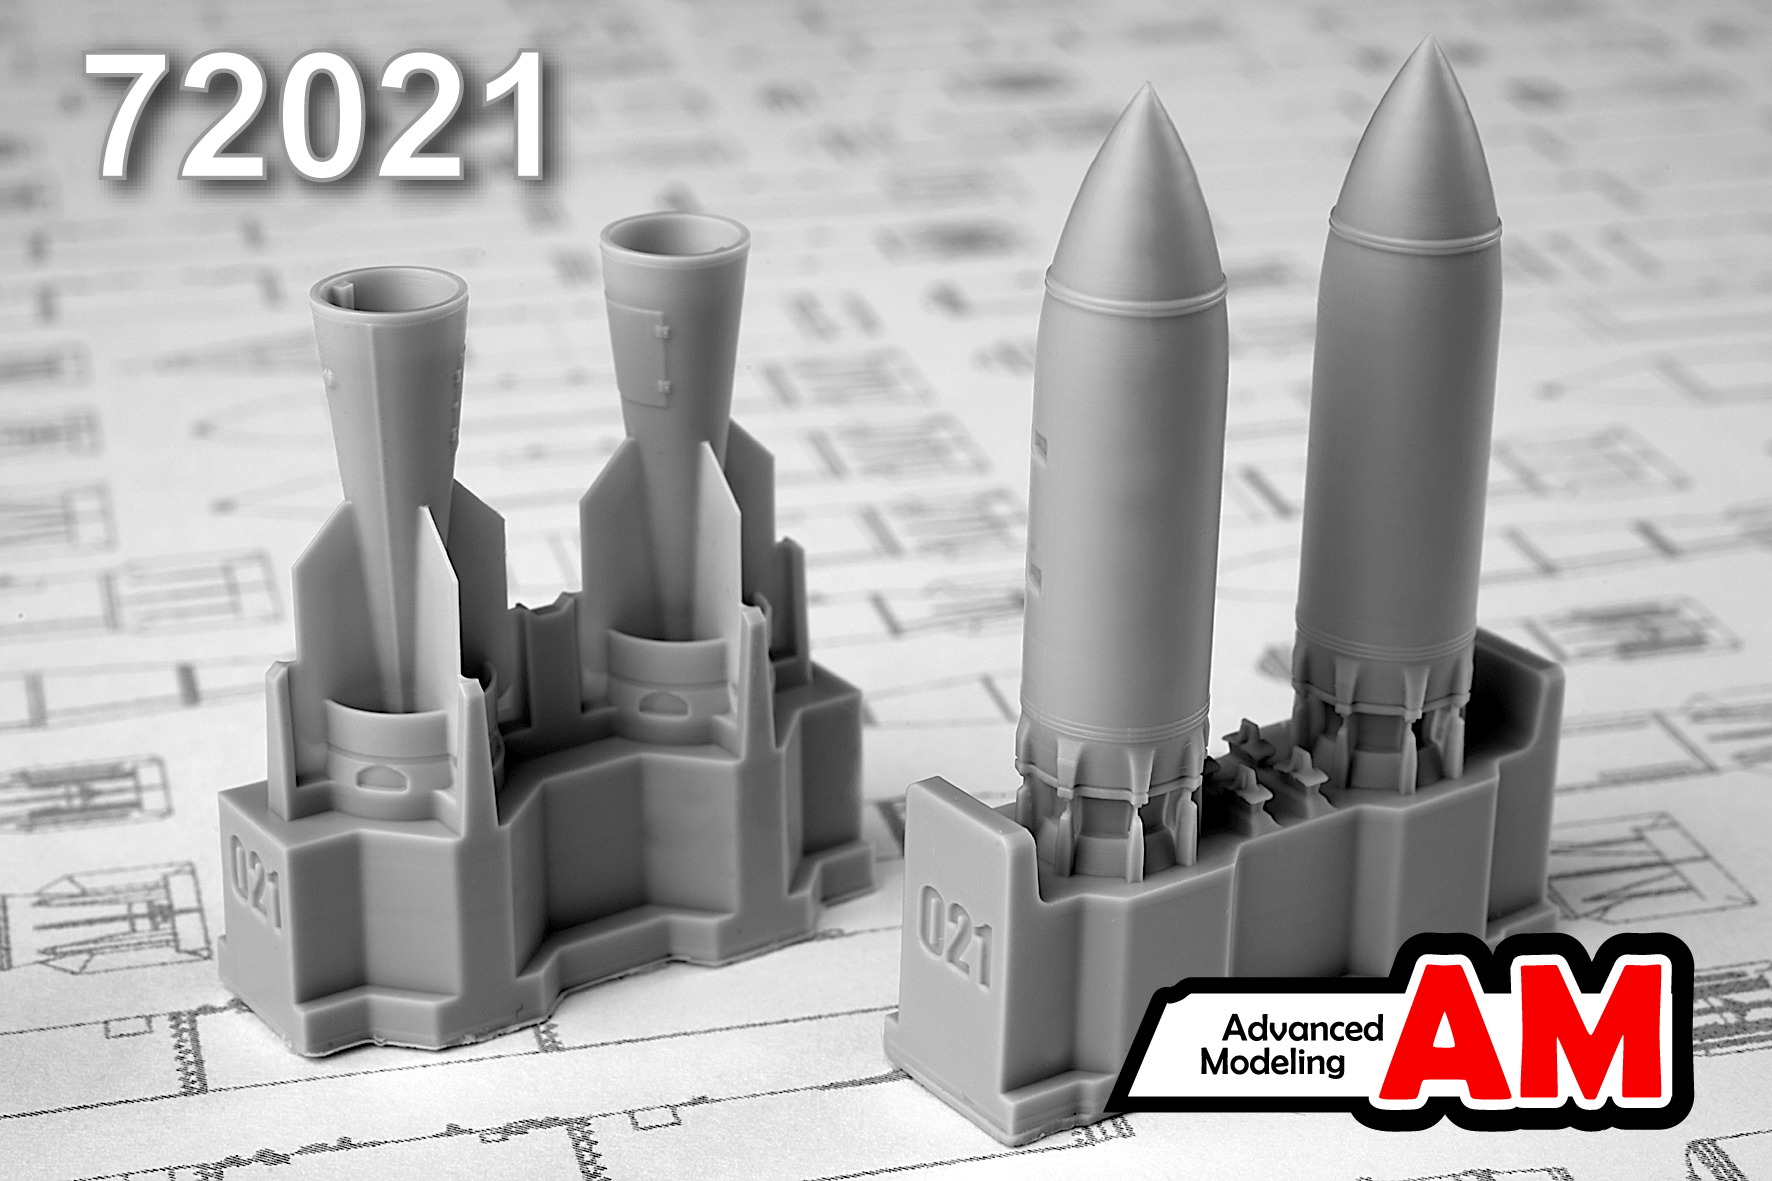 Дополнения из смолы 1/72 БЕТАБ-500 бетонобойная бомба (Advanced Modeling)